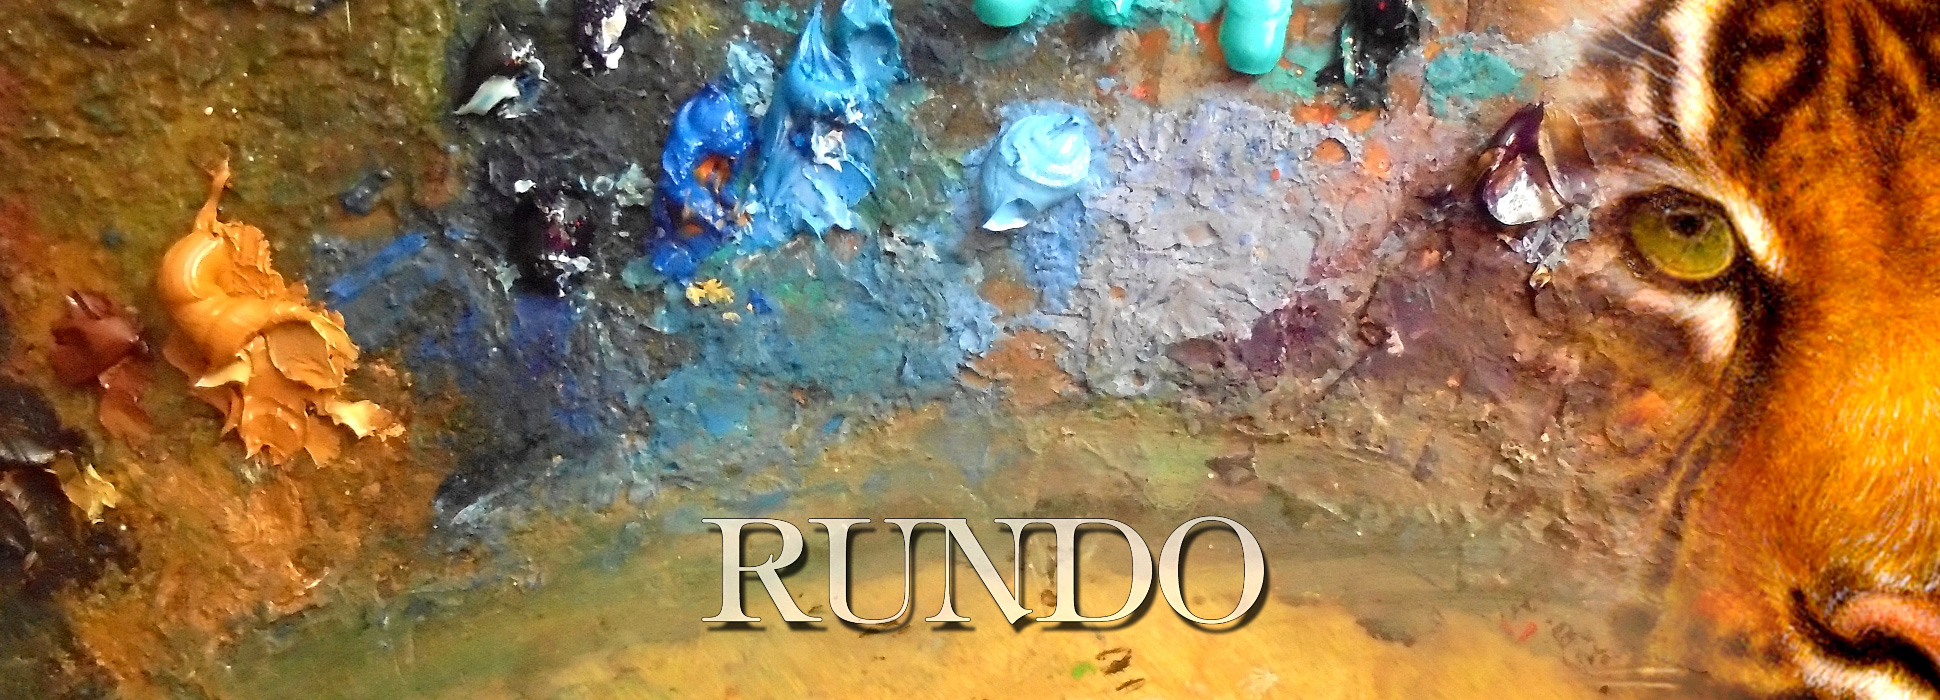 Ron Rundo Wall Sculpture